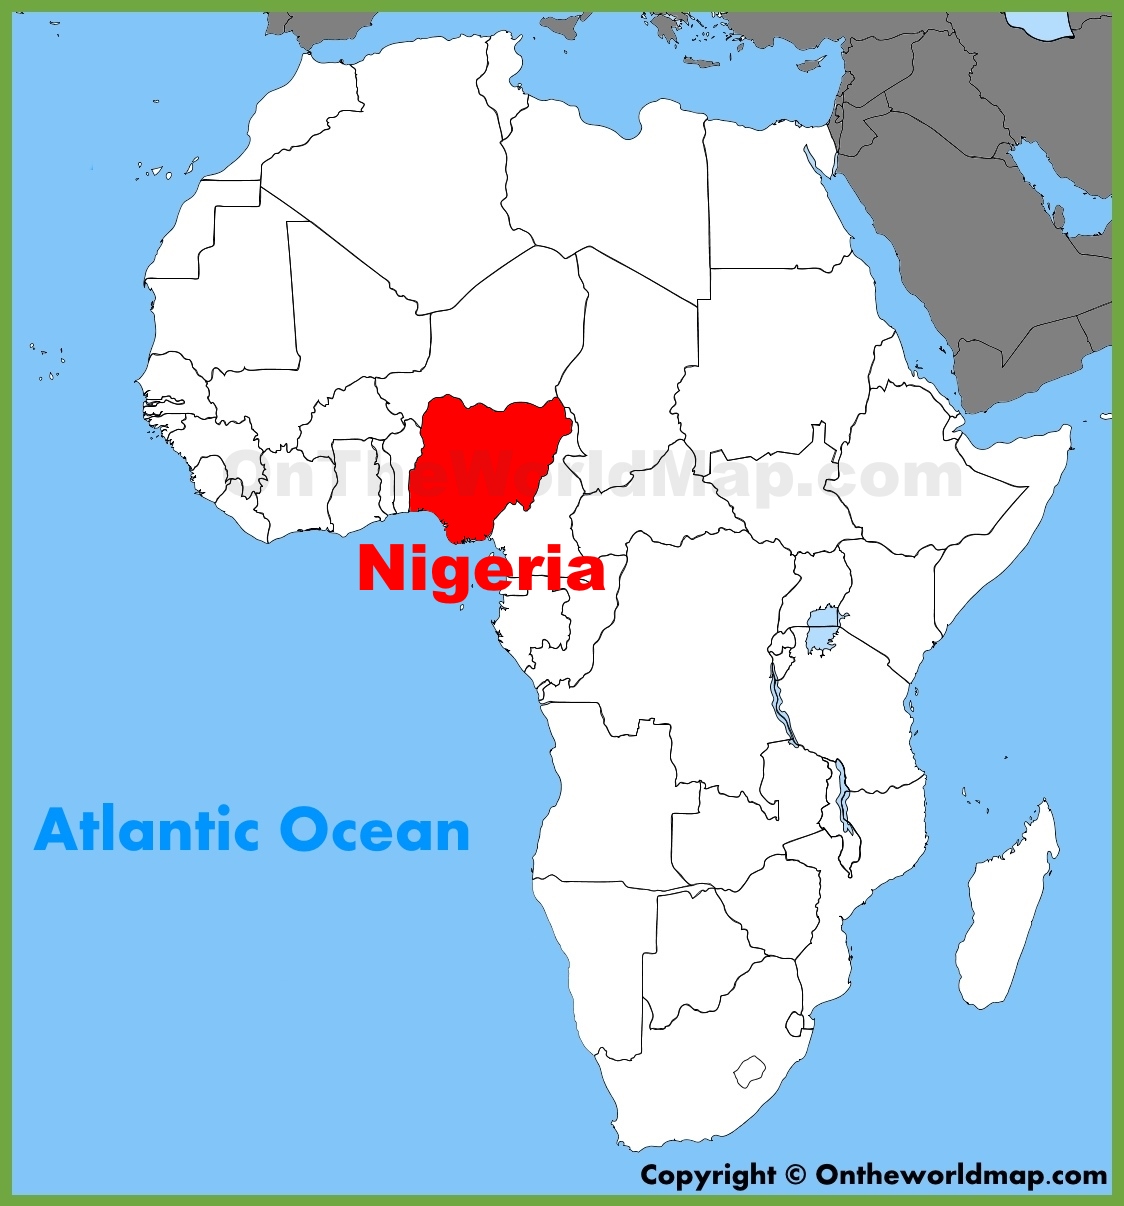 http://ontheworldmap.com/nigeria/nigeria-location-on-the-africa-map.html